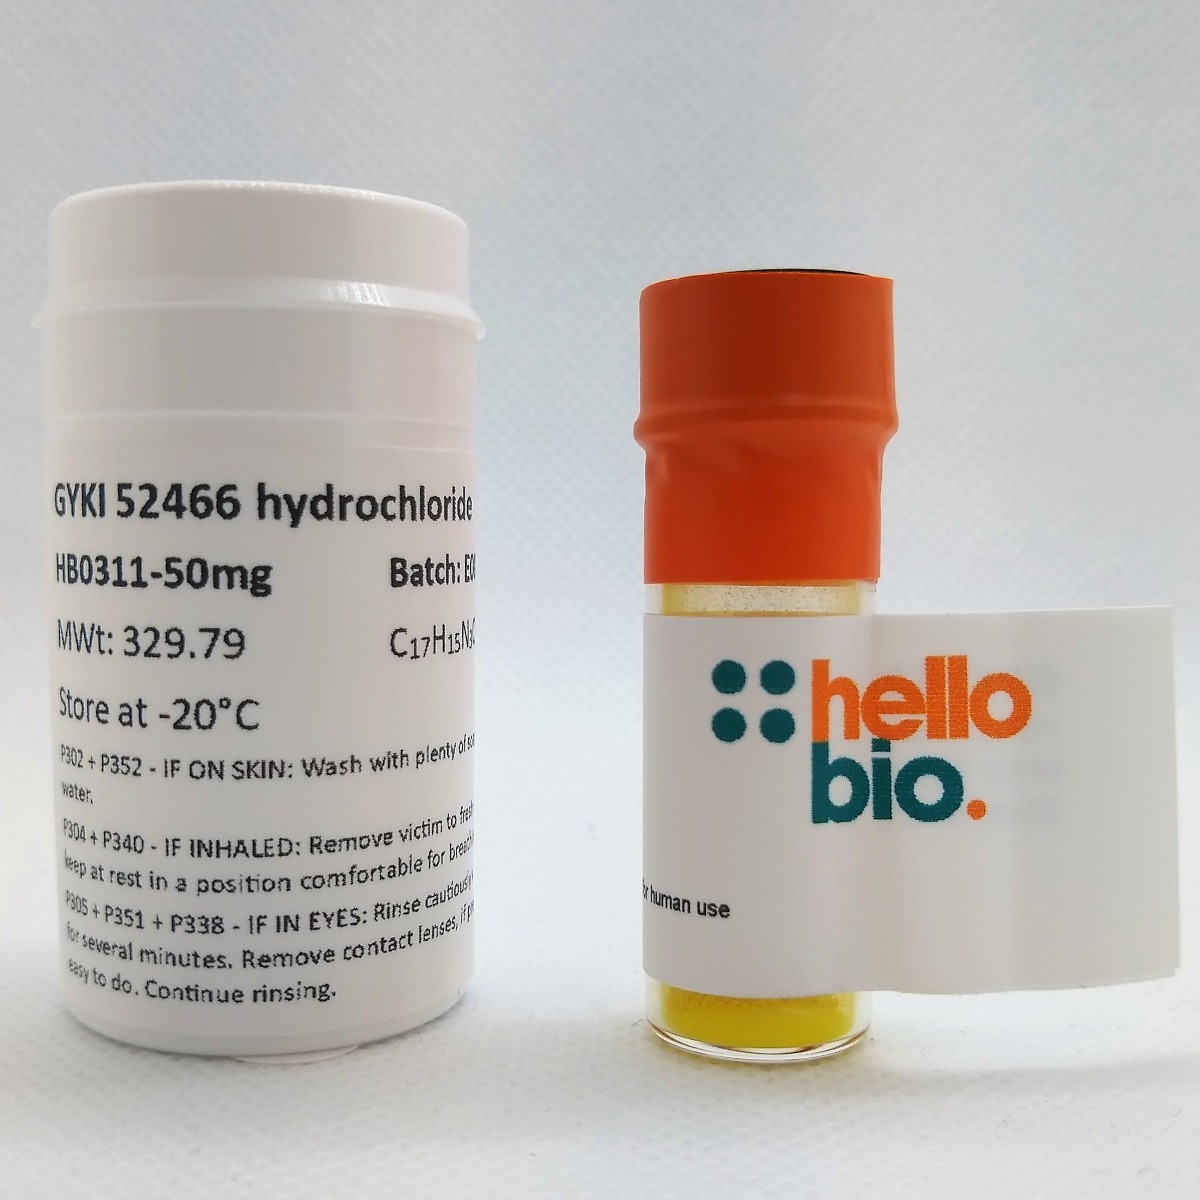 GYKI 52466 hydrochloride product vial image | Hello Bio